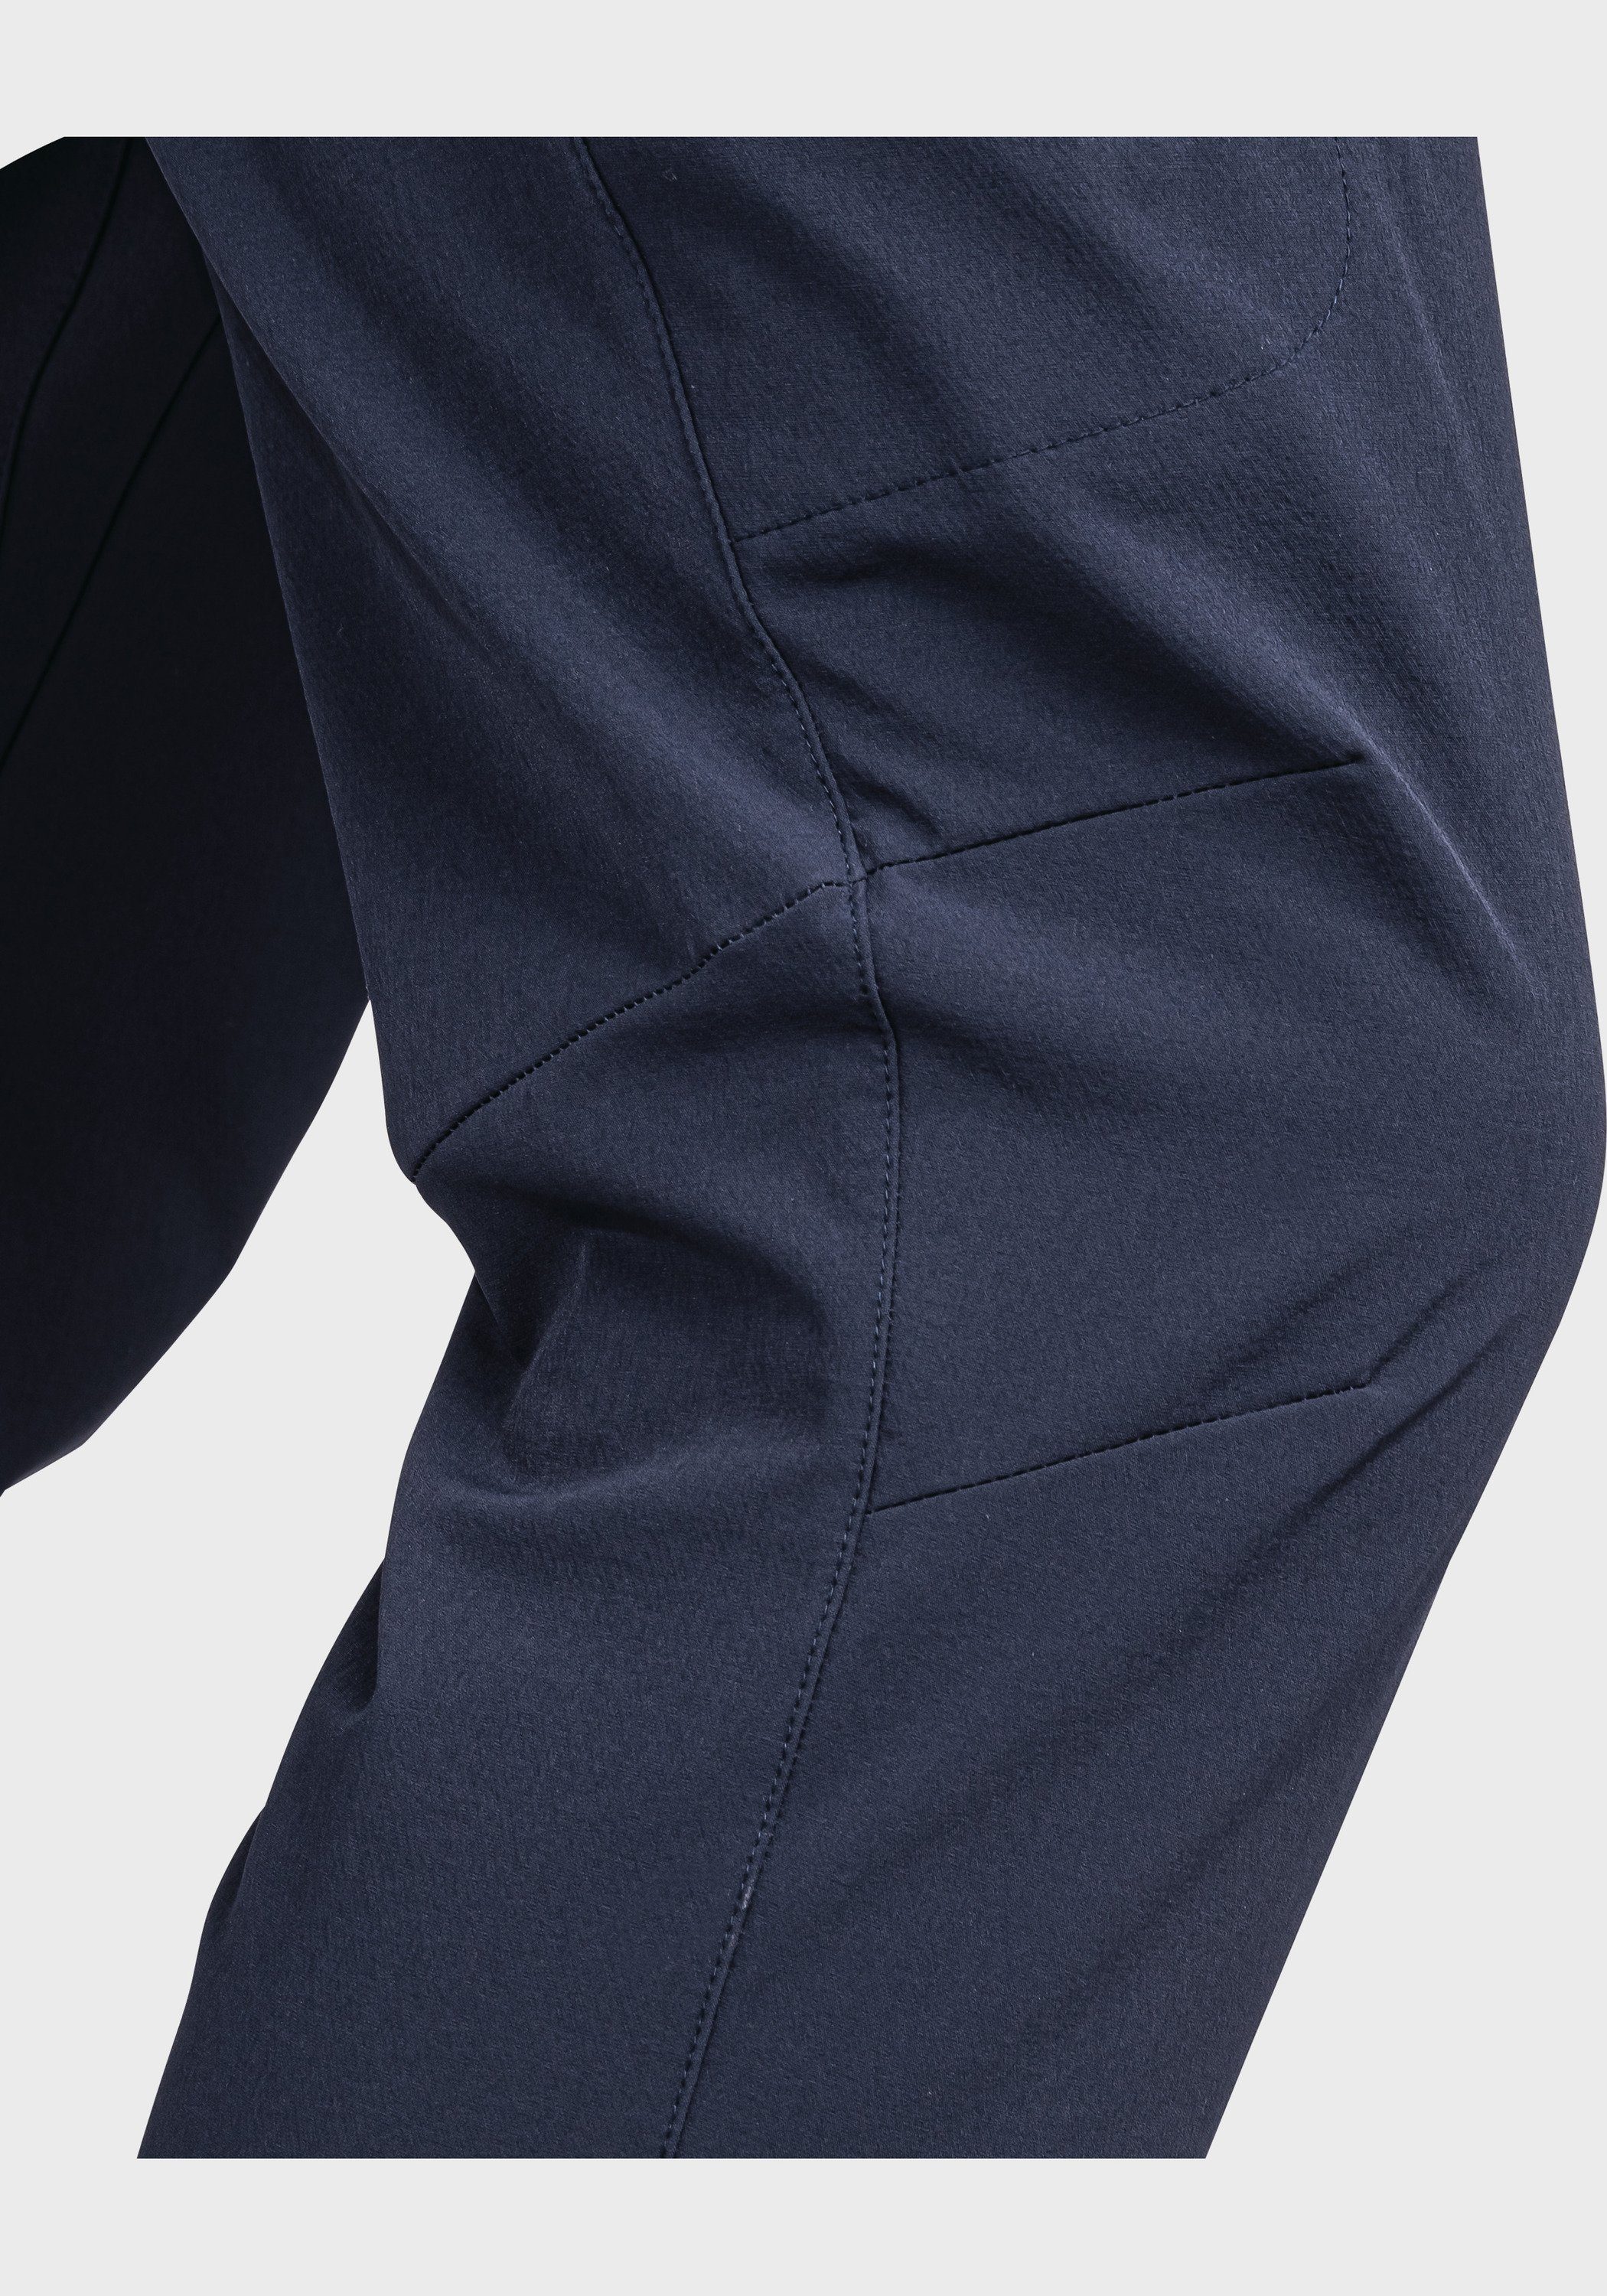 Hochfilzen Schöffel Outdoorhose Pants M blau